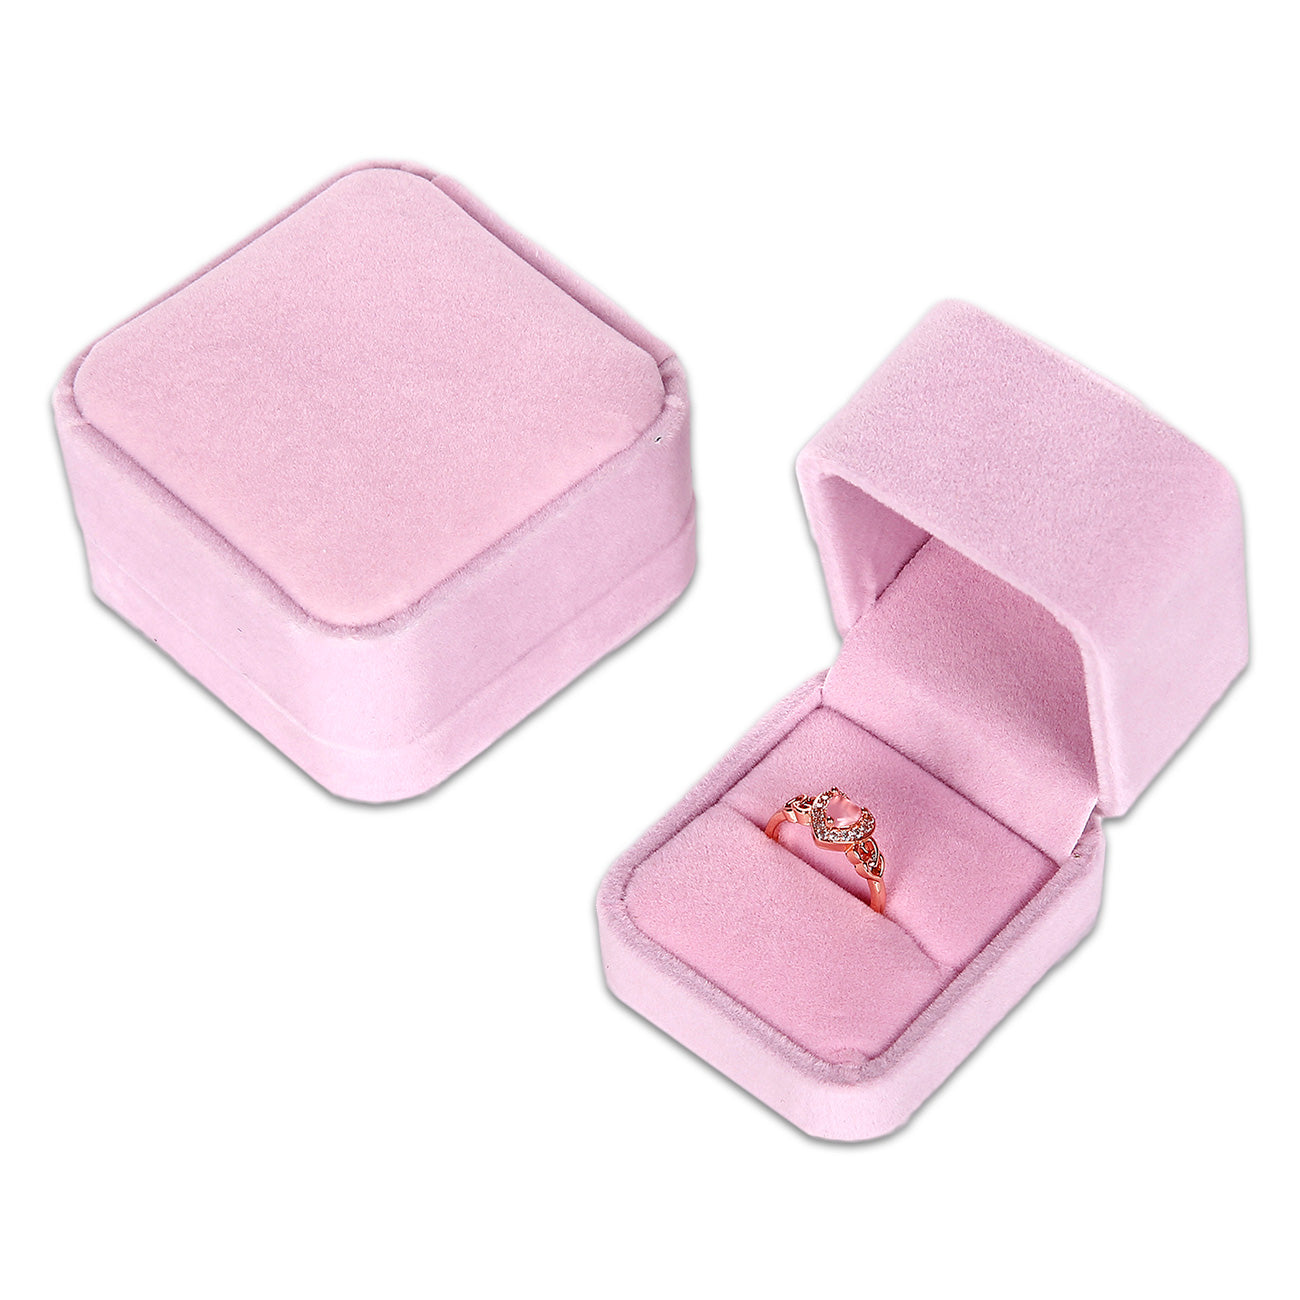 Jenna Pink Sapphire Ring - Bespoke Engagement Ring